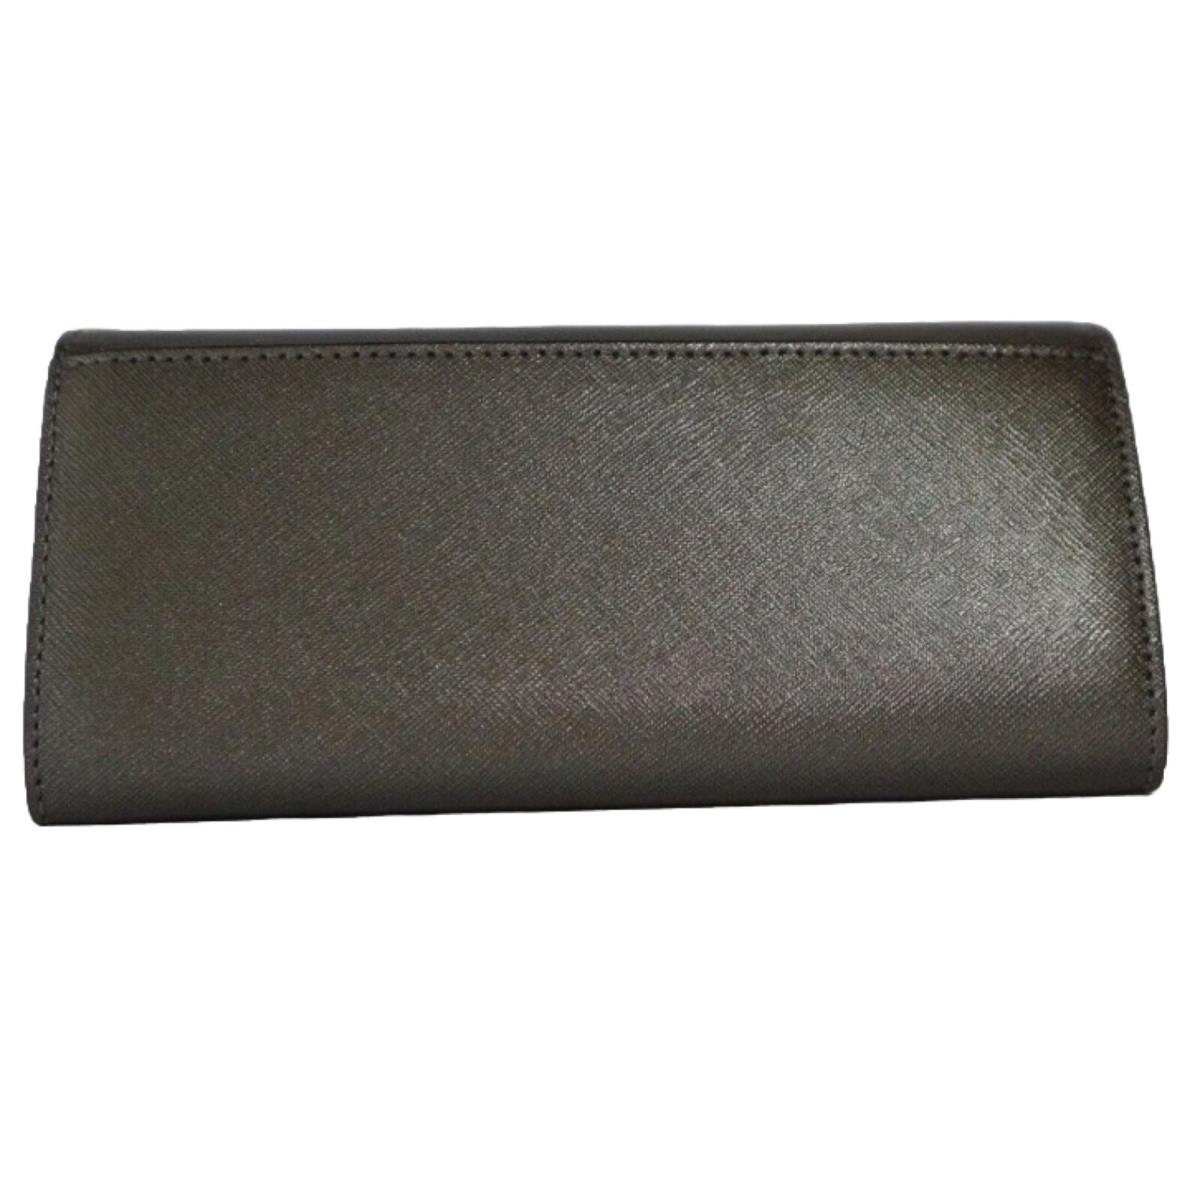 Michael Kors Jet Set Travel Saffiano Leather Carryall Wallet Nickel